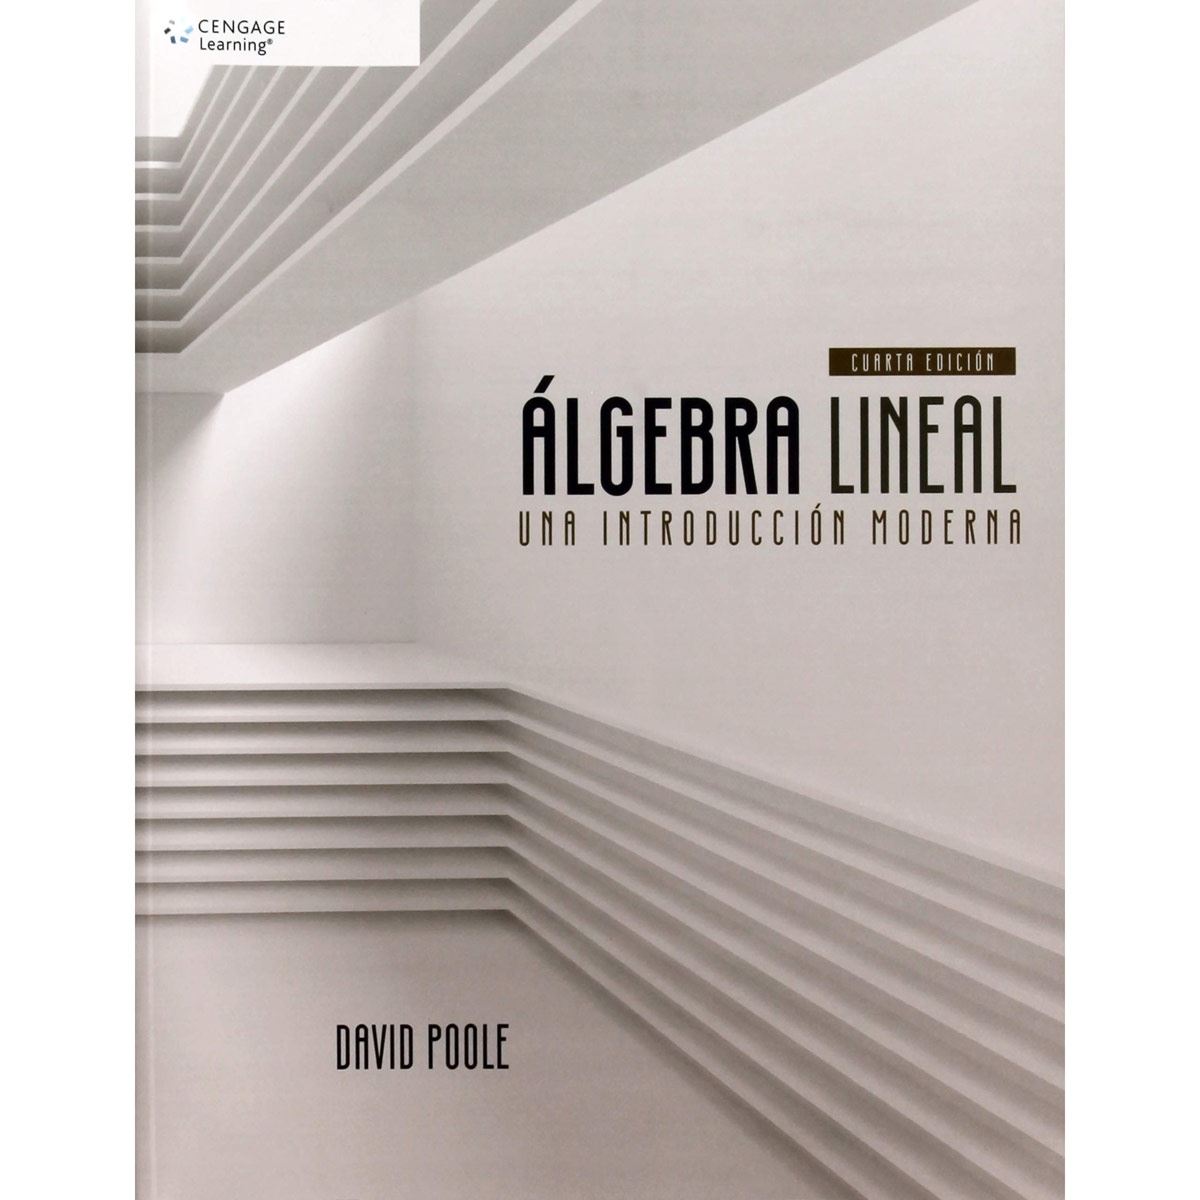 Álgebra lineal: una introduccion moderna